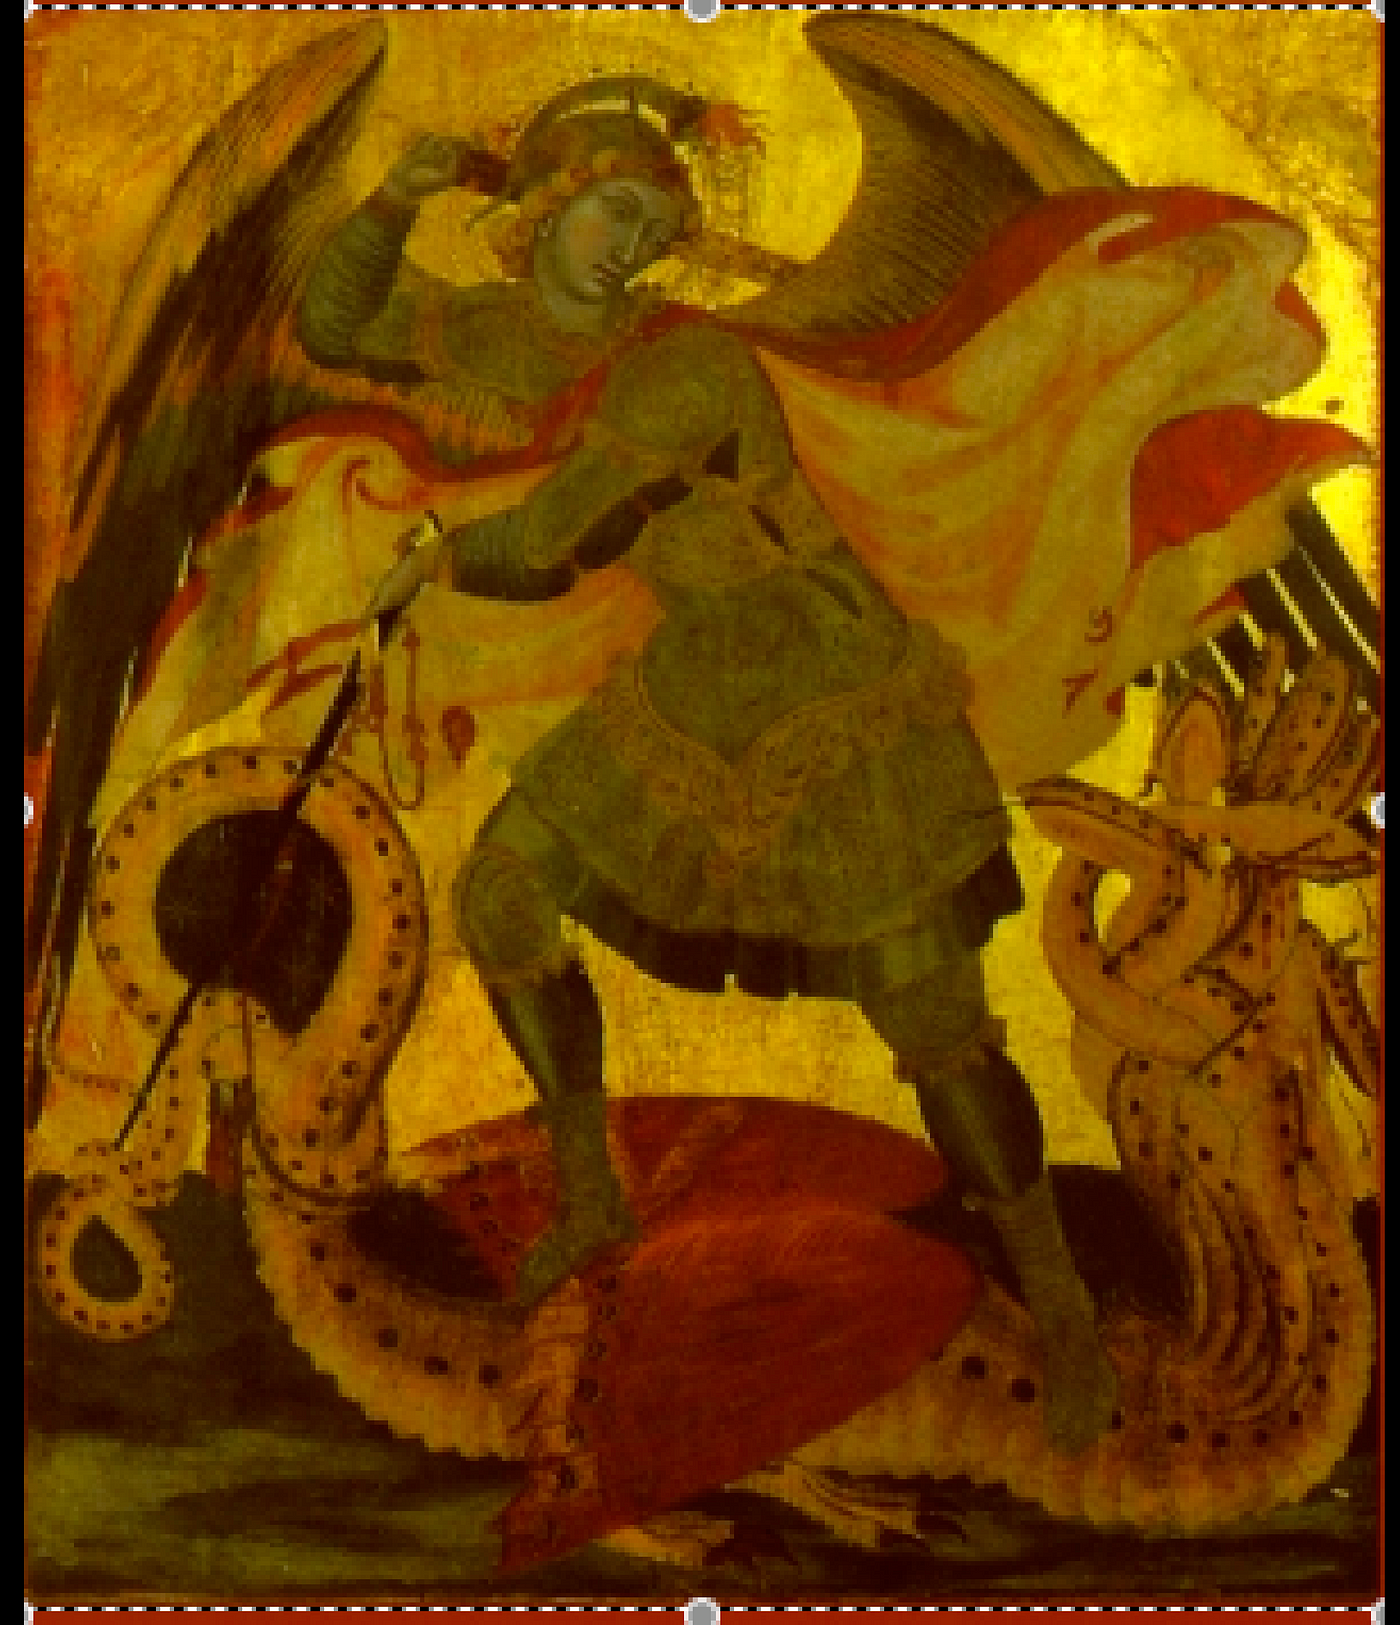 archangel michael vs dragon